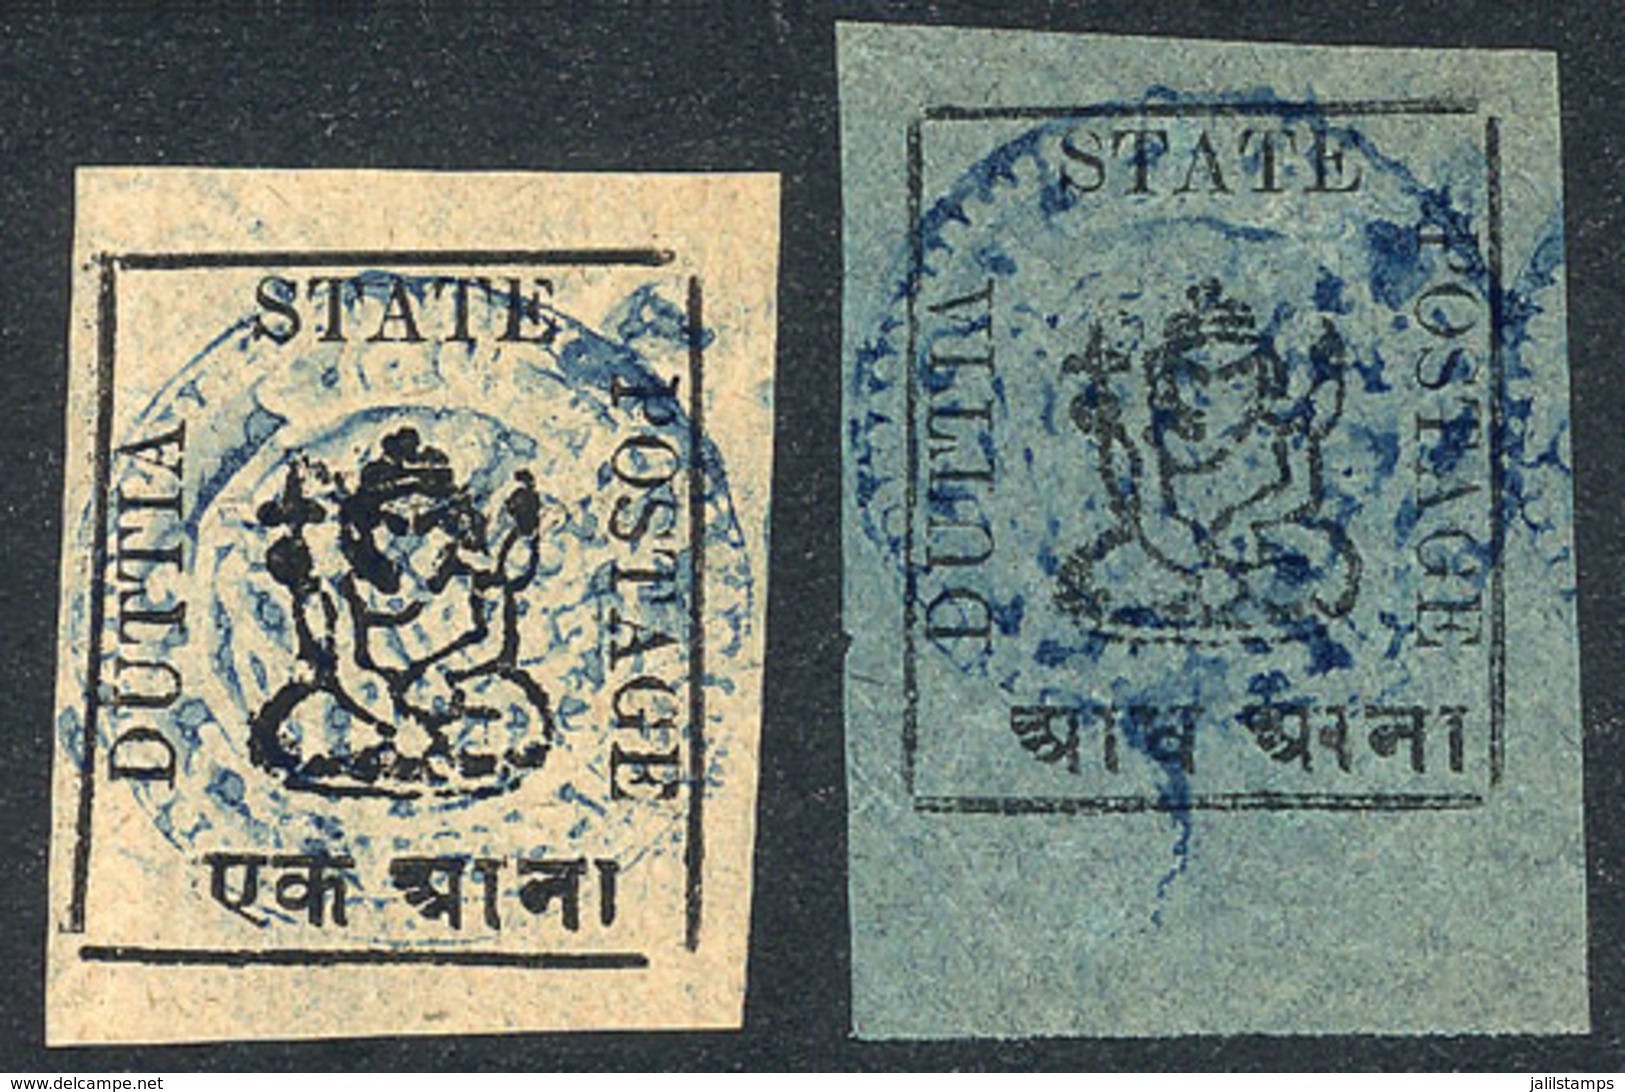 INDIA - DUTTIA: Sc.10 + 12, Mint No Gum (as Issued), Excellent Quality, Catalog Value US$325. - Datia